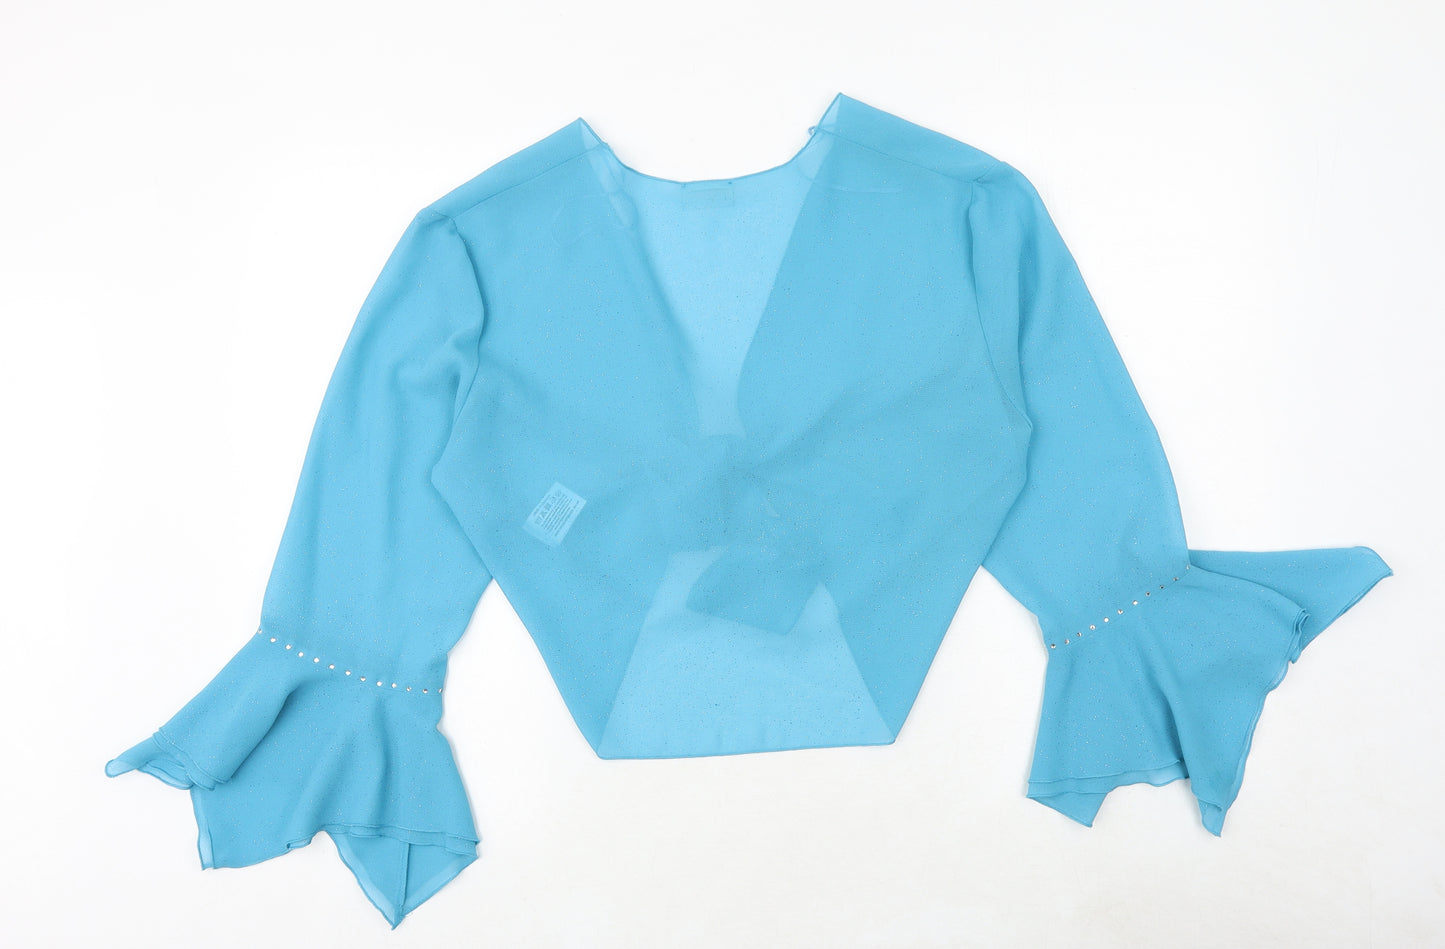 Roman Originals Womens Blue Polyester Wrap Blouse Size 18 V-Neck